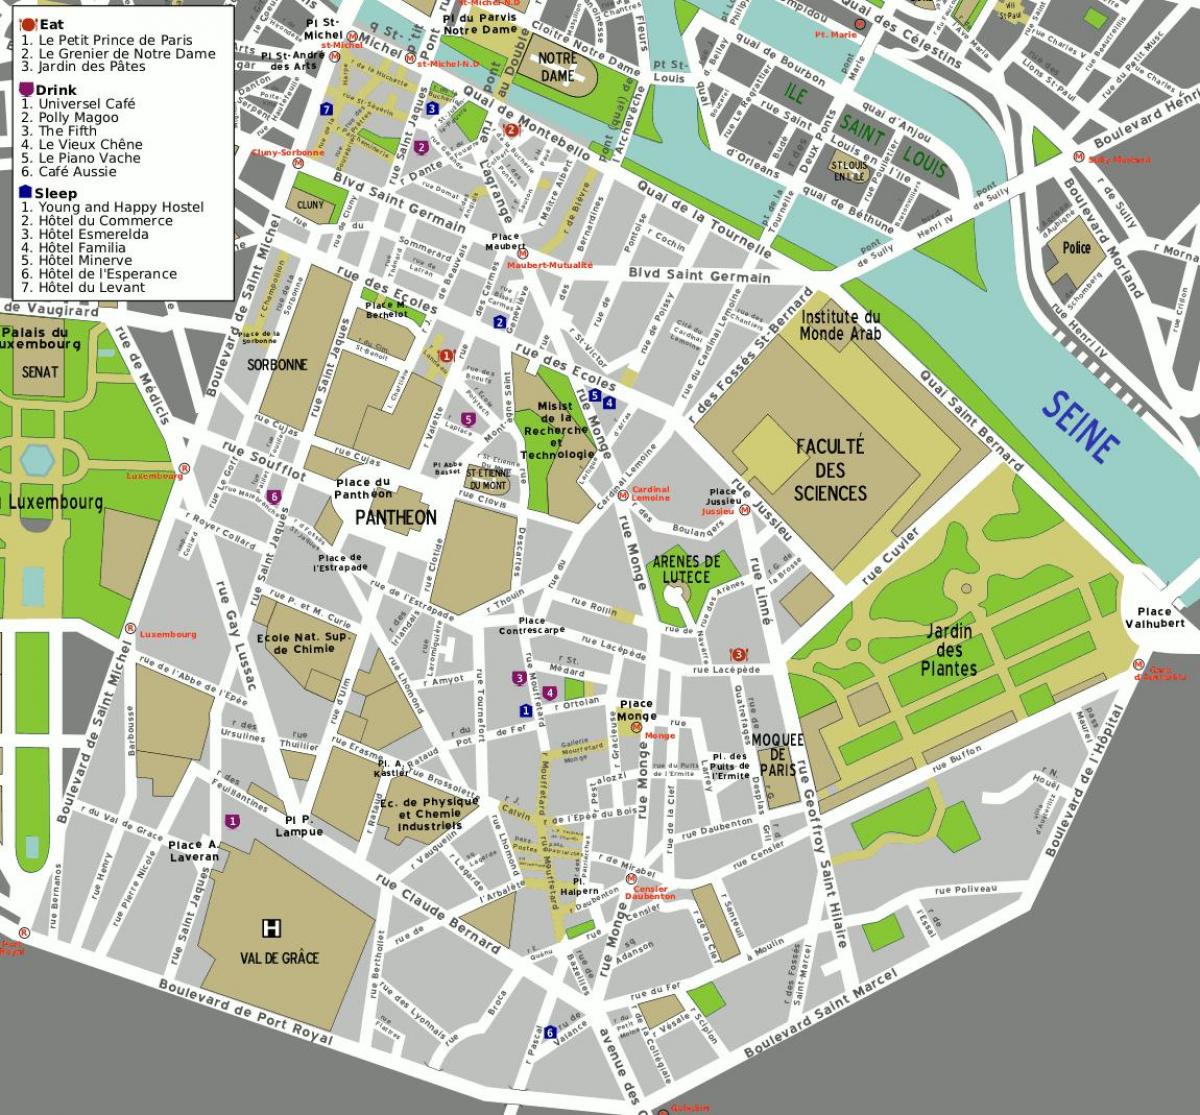 Картка 5-му окрузі Парижа